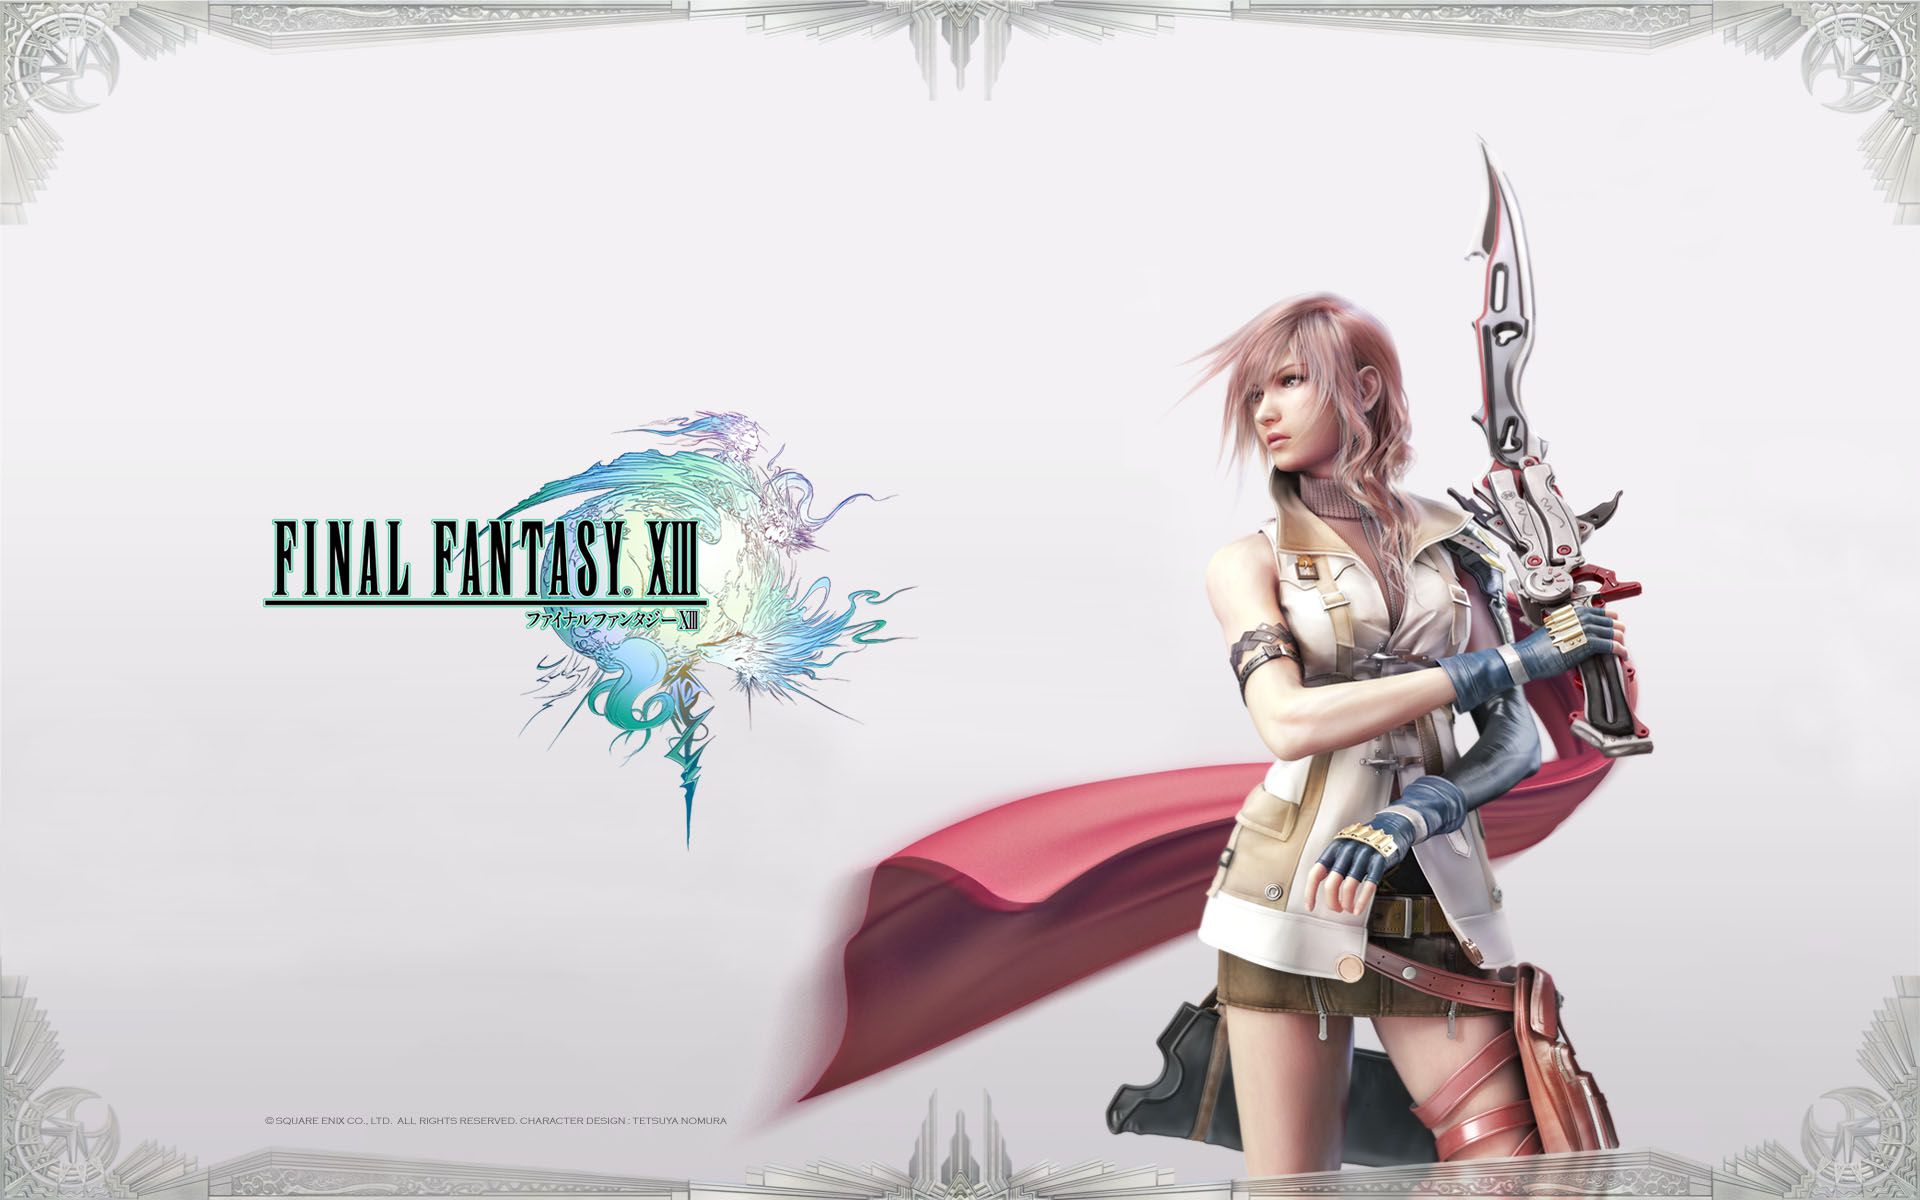 Fabula Nova Crystallis Final Fantasy wallpapers - Final Fantasy